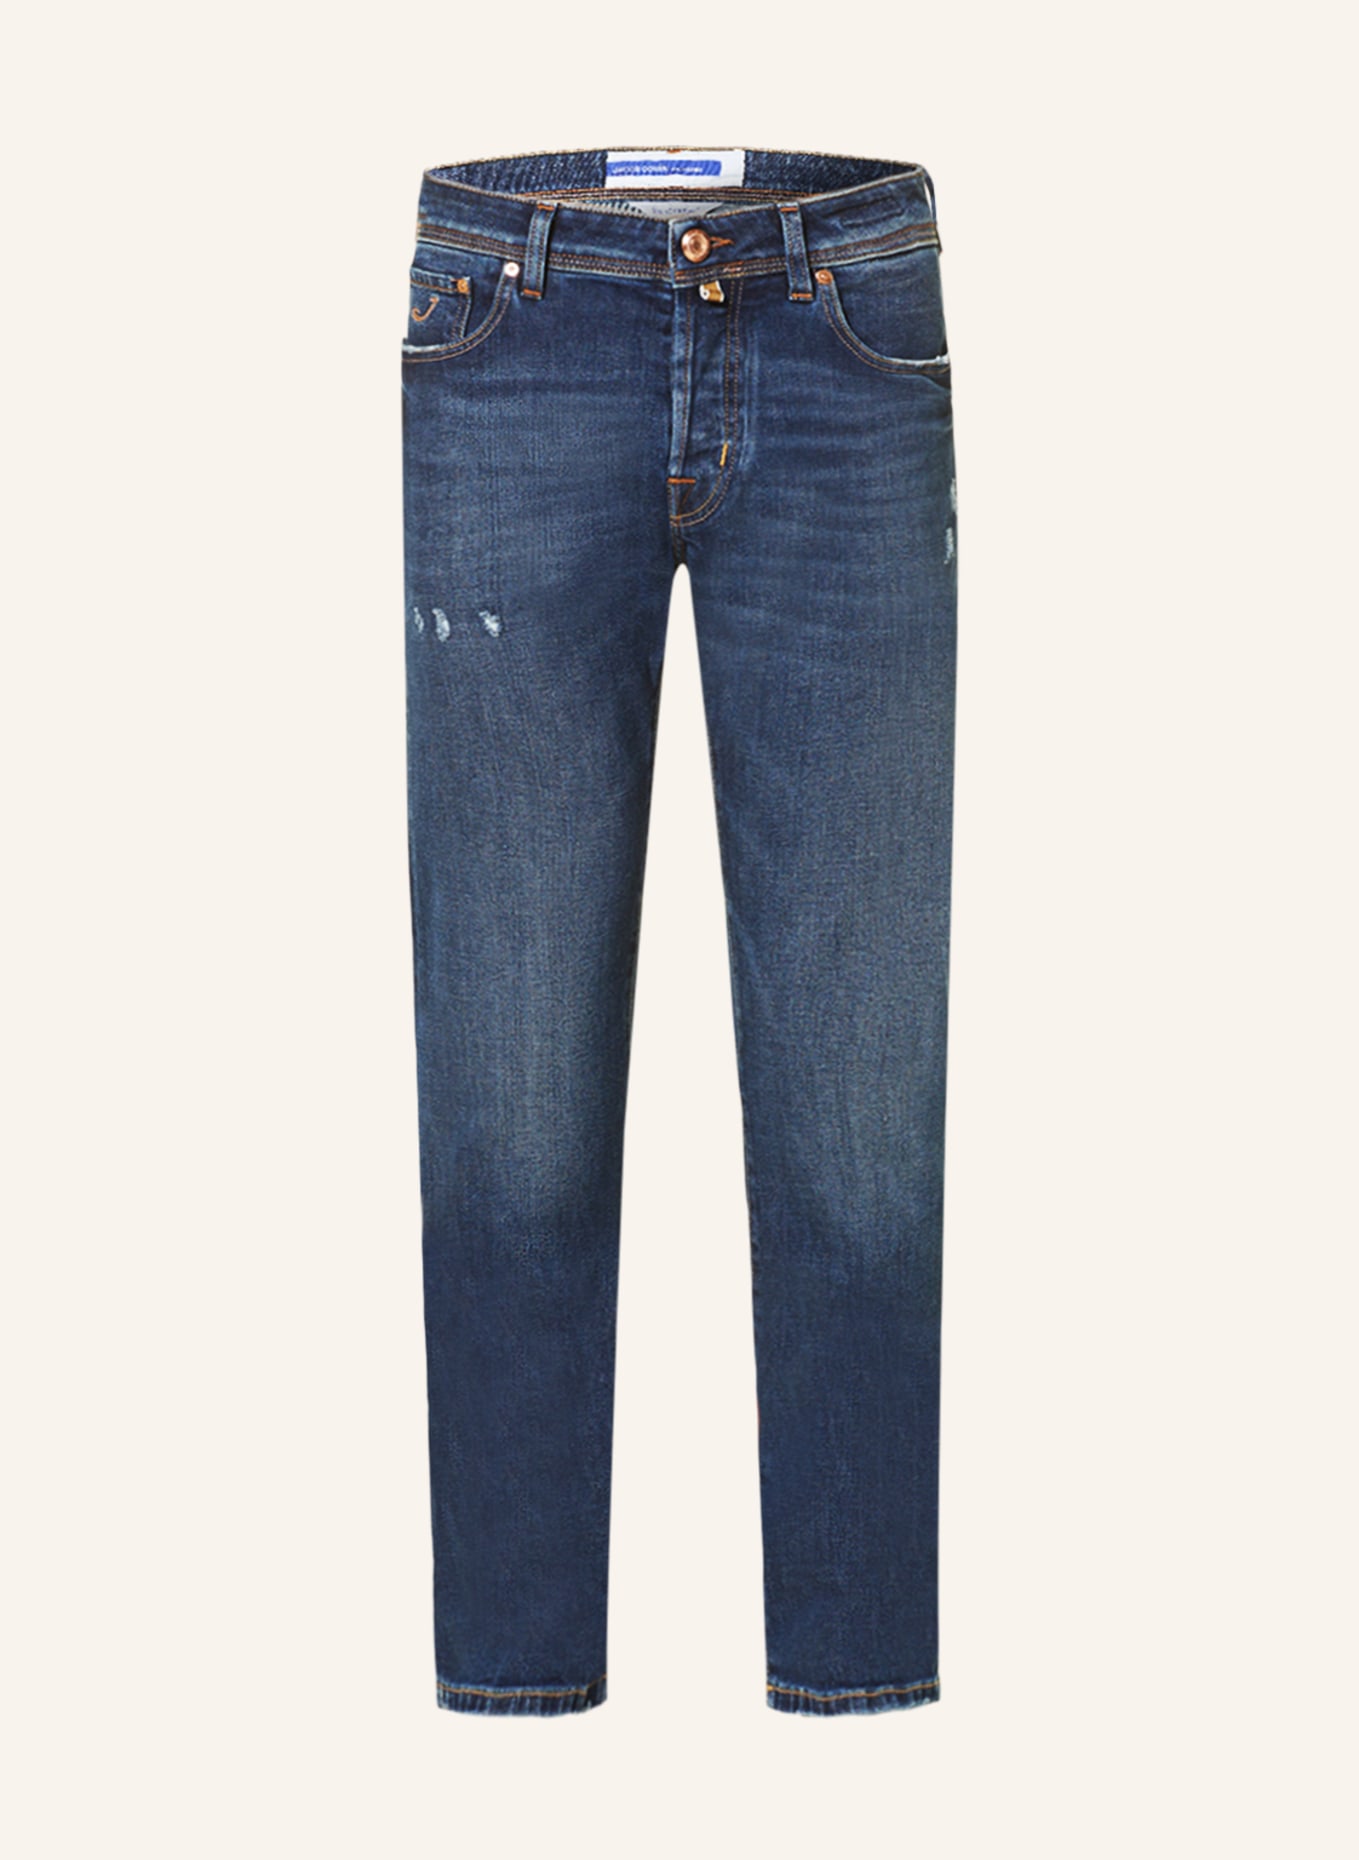 JACOB COHEN Destroyed Jeans BARD Slim Fit, Farbe: 514D Mid Blue (Bild 1)